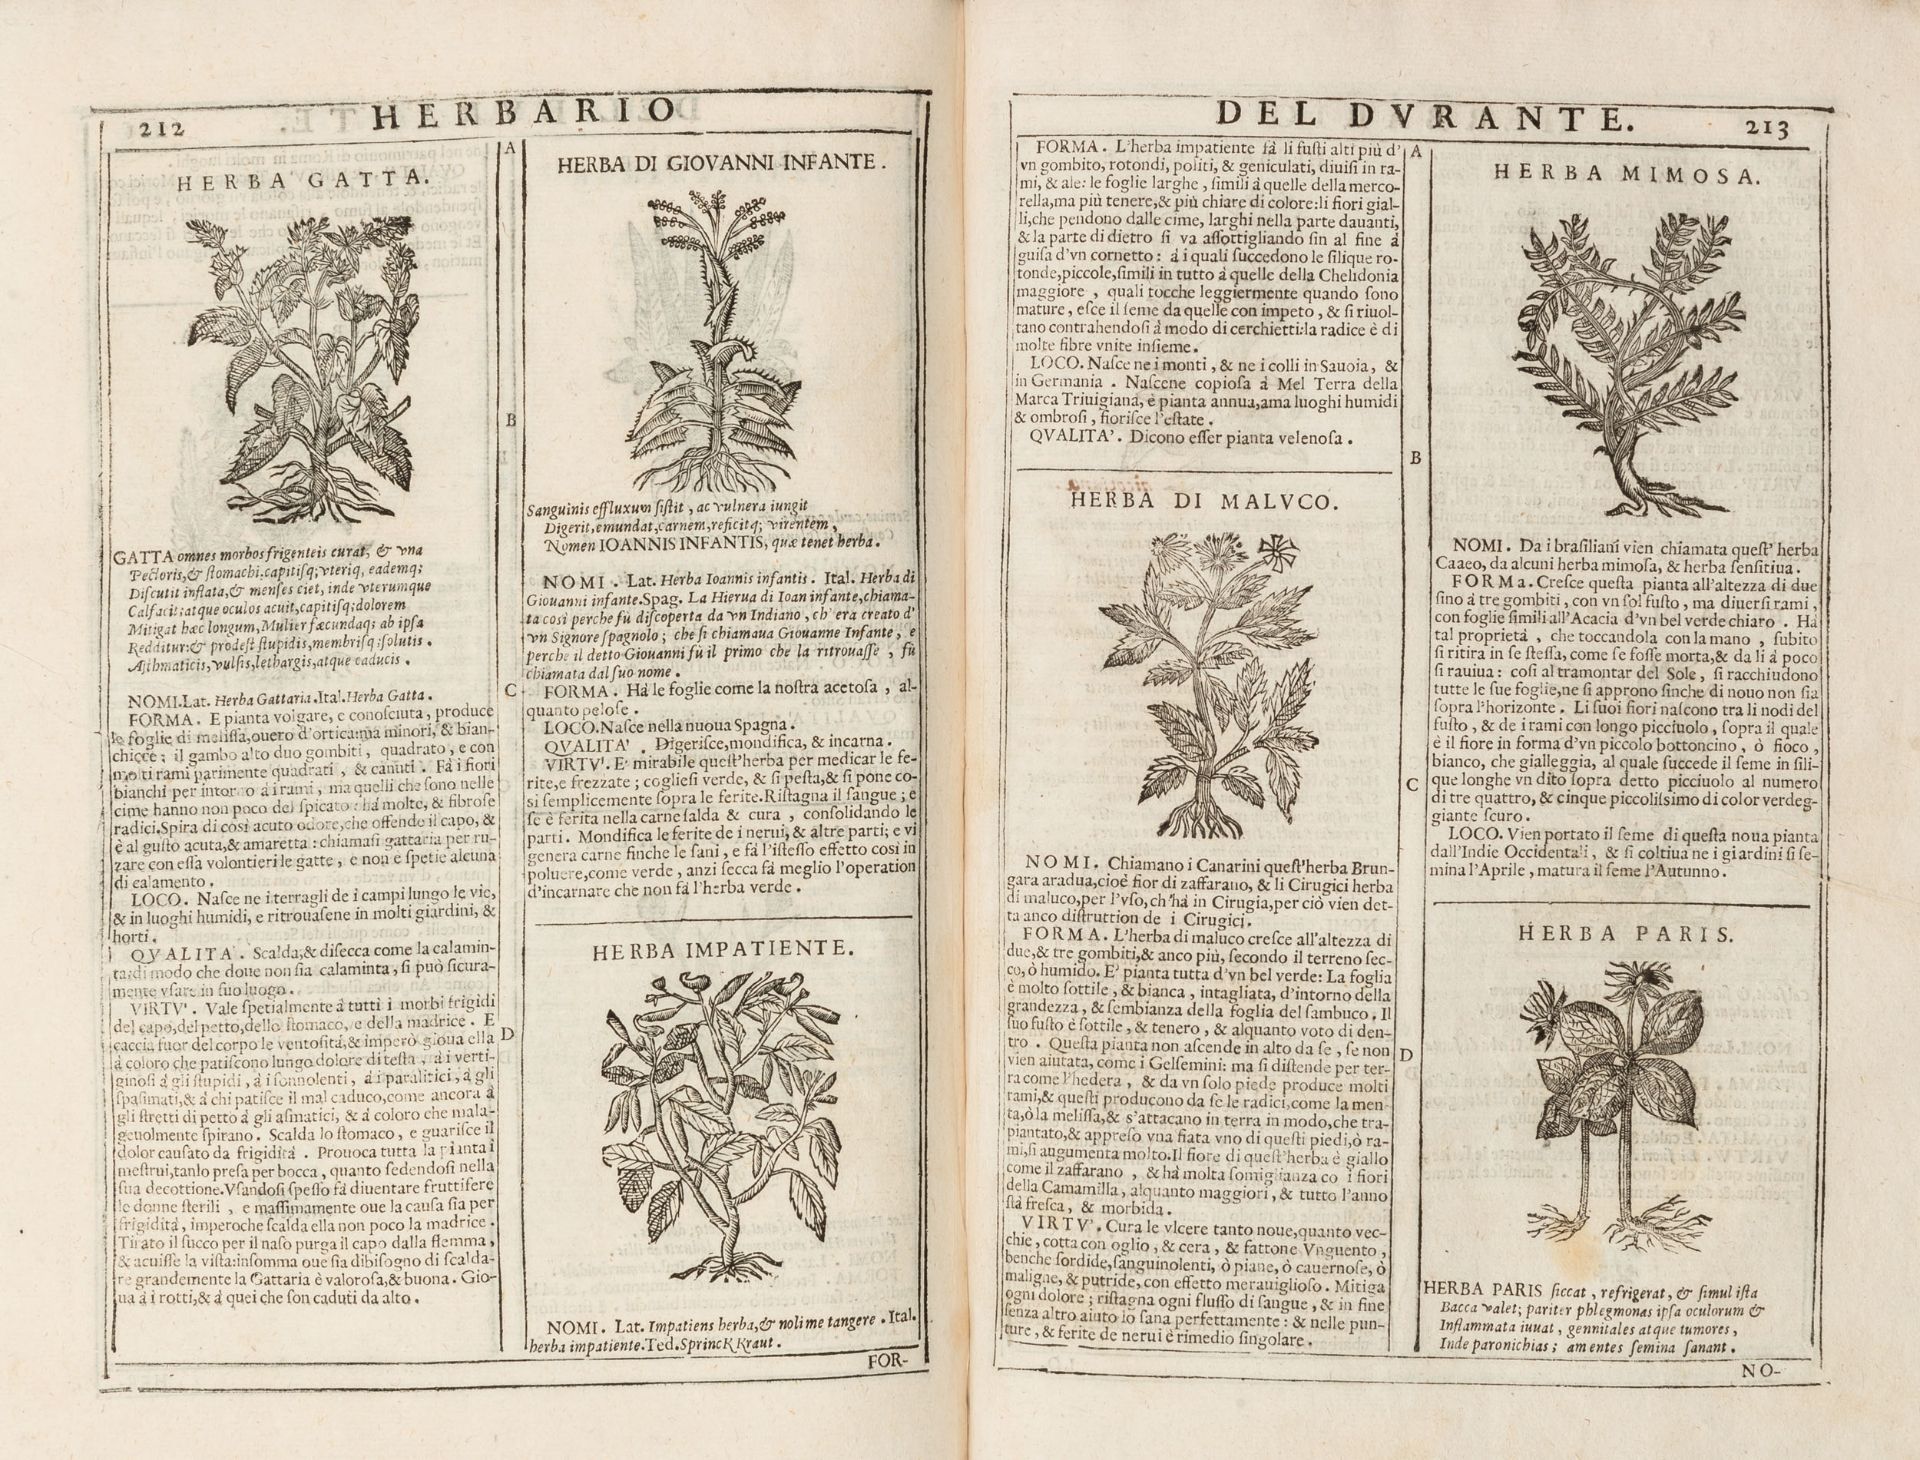 DURANTE, Castor (1529-1590). Herbario nuovo . Venice: Hertz, 1684. - Image 2 of 3